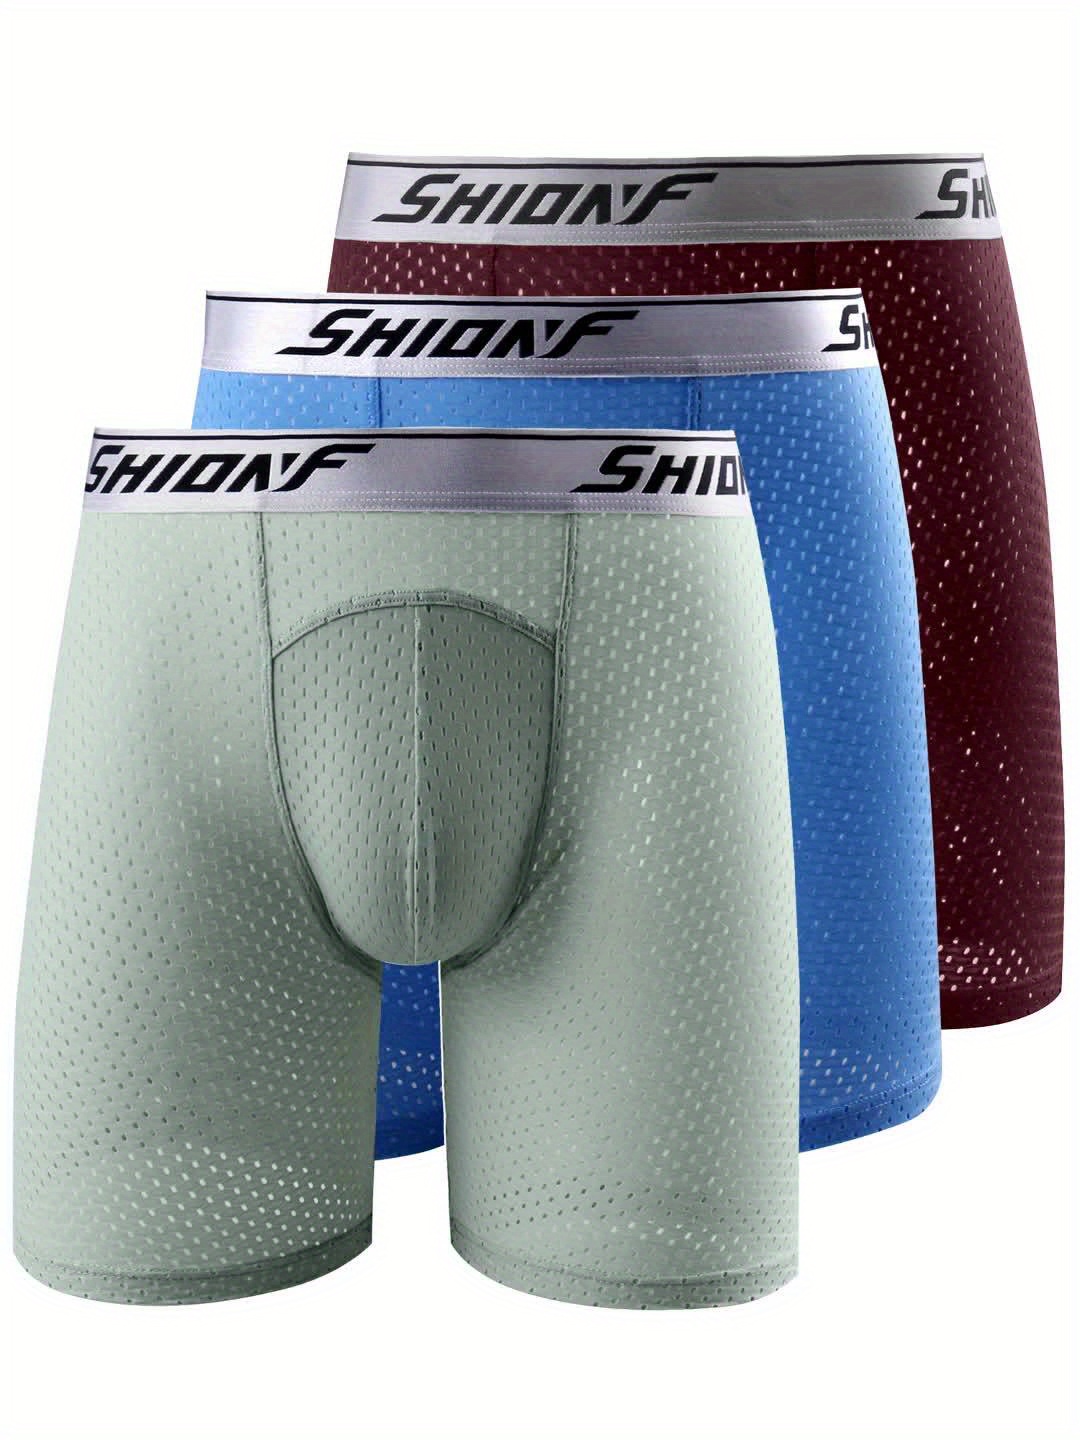 Plus Size Men's Mesh Anti-wear Nylon Comfy Boxer Briefs Underwear